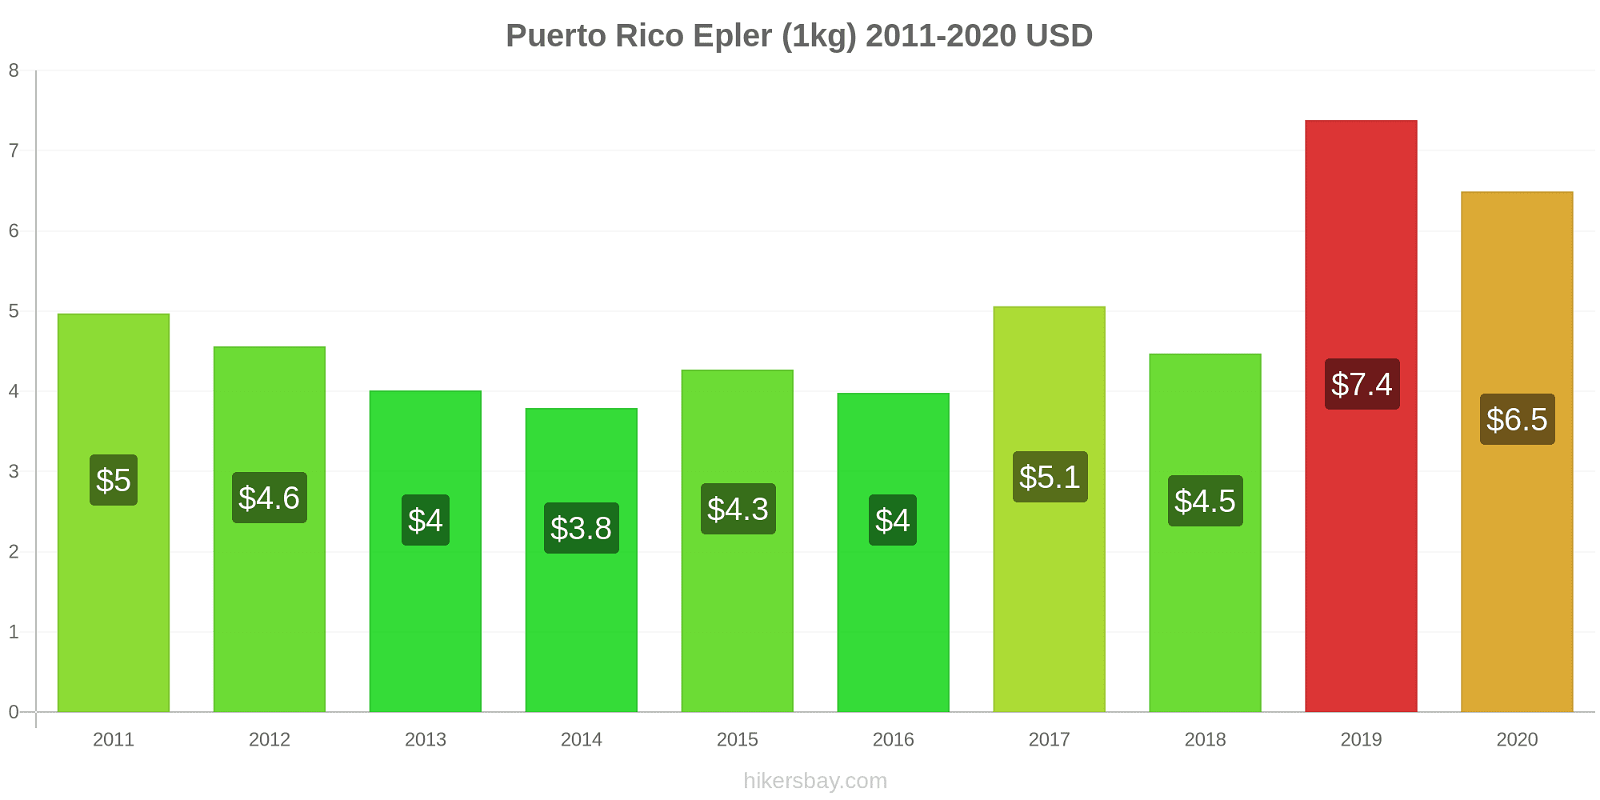 Puerto Rico prisendringer Epler (1kg) hikersbay.com